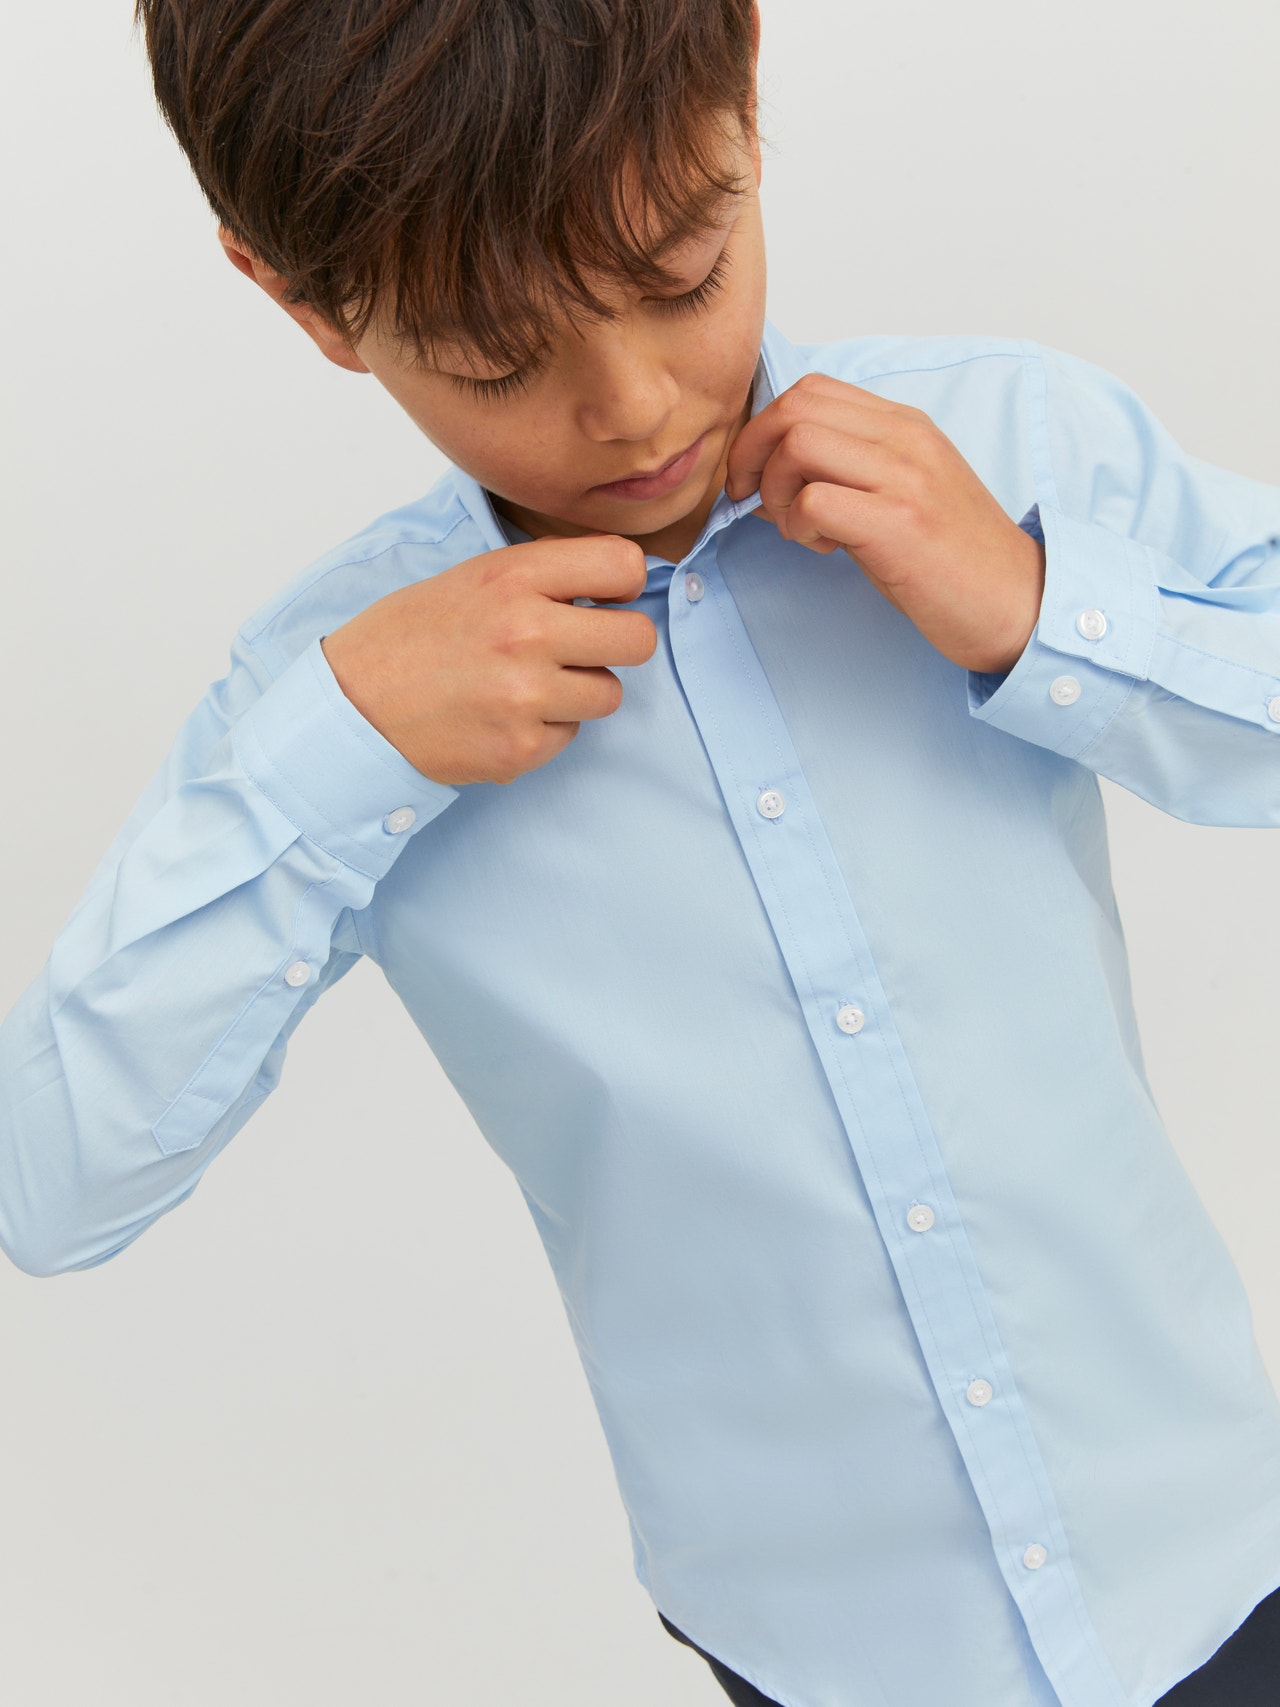 Jack & Jones Camisa Formal Para meninos -Cashmere Blue - 12223343